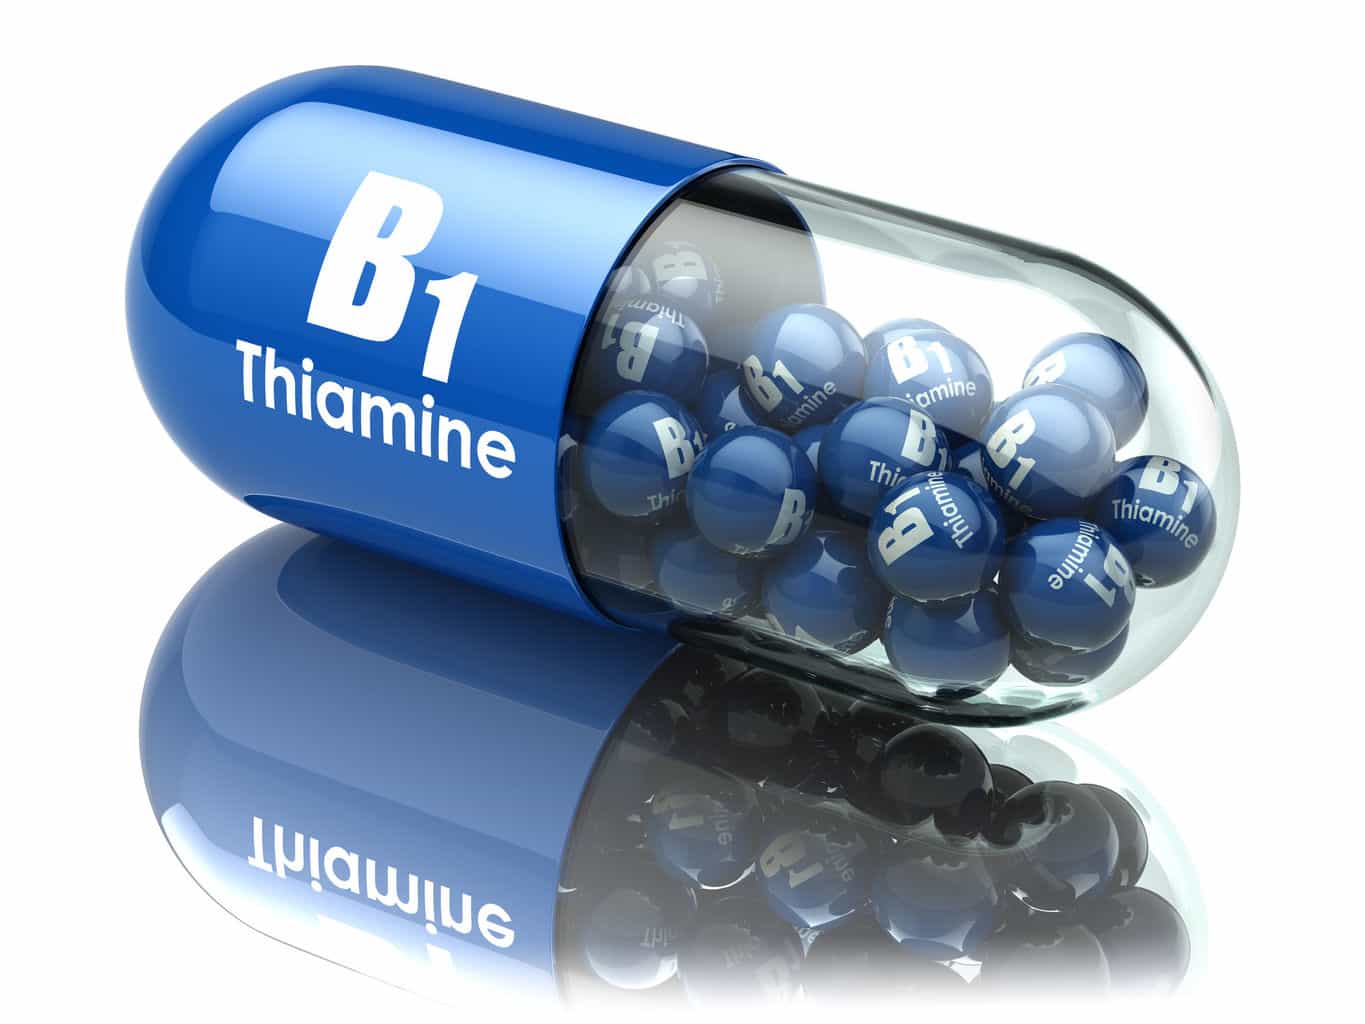 Thiamine may suppress cancer